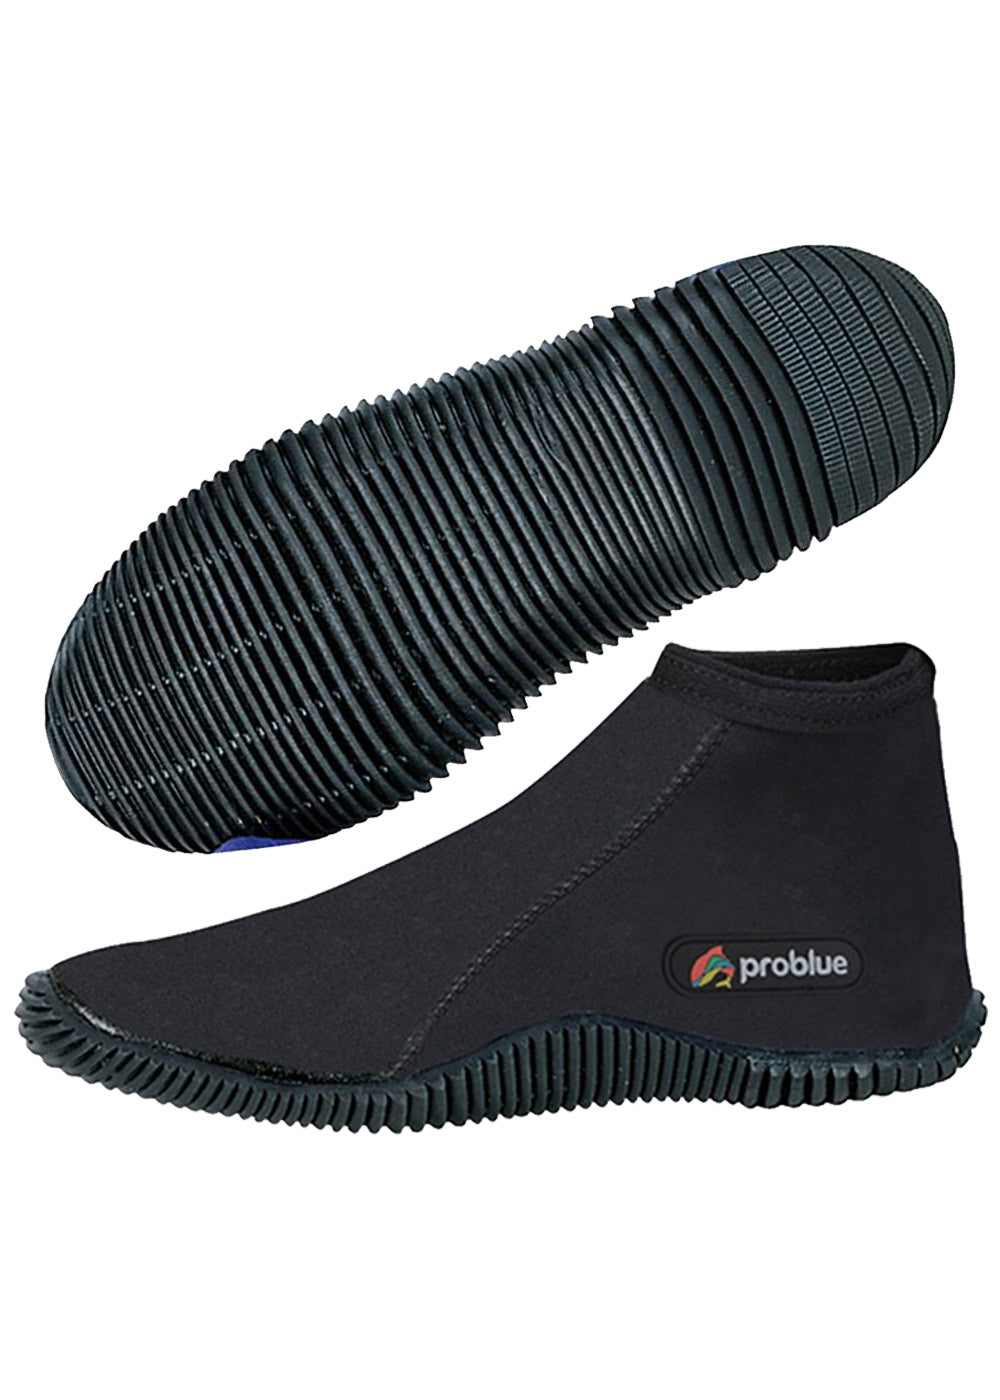 Problue Low Cut Dive Boot 3mm